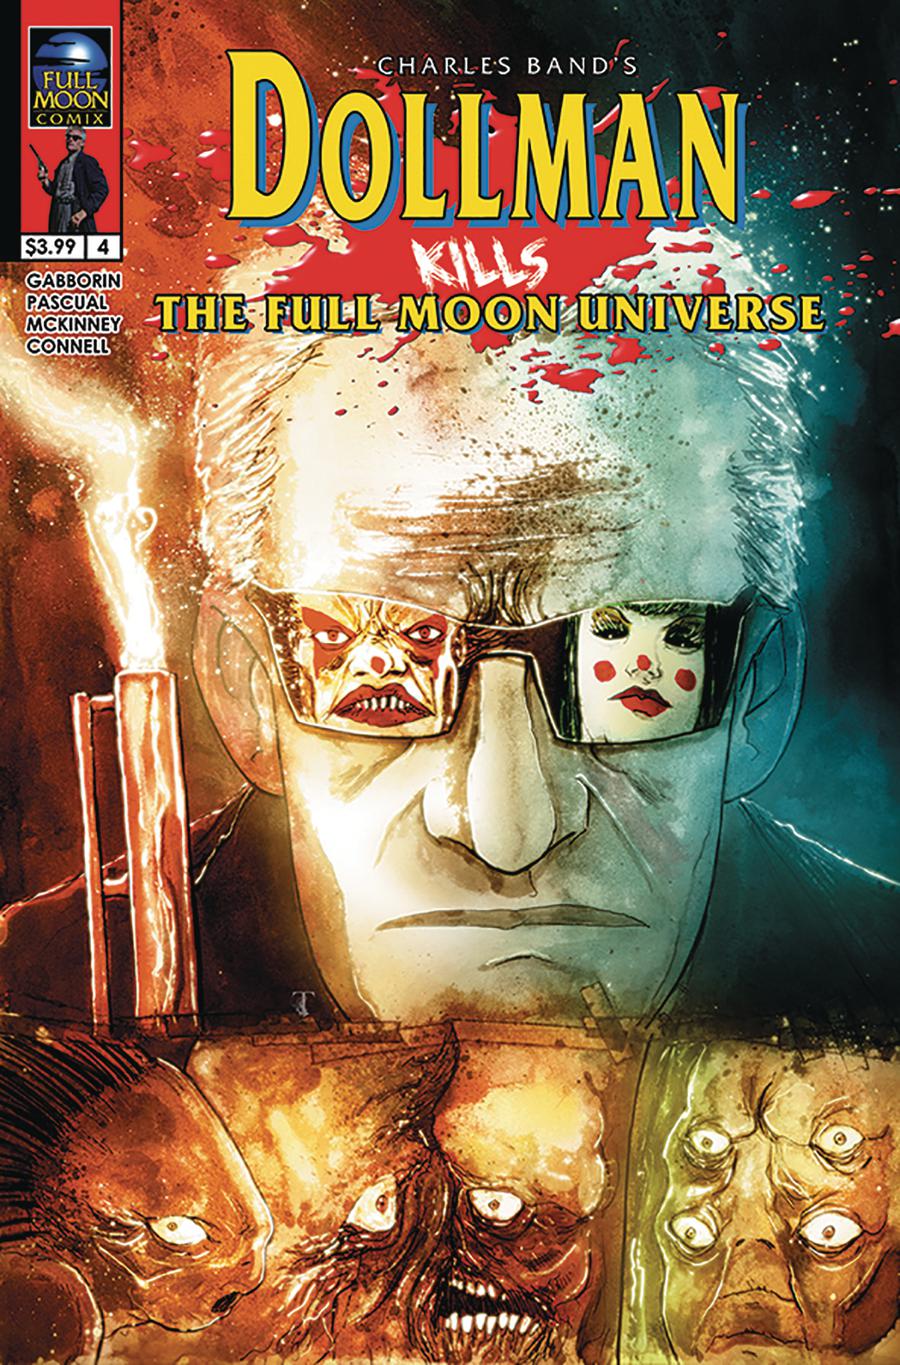 Dollman Kills The Full Moon Universe #4 Cover A Regular Ben Templesmith Cover